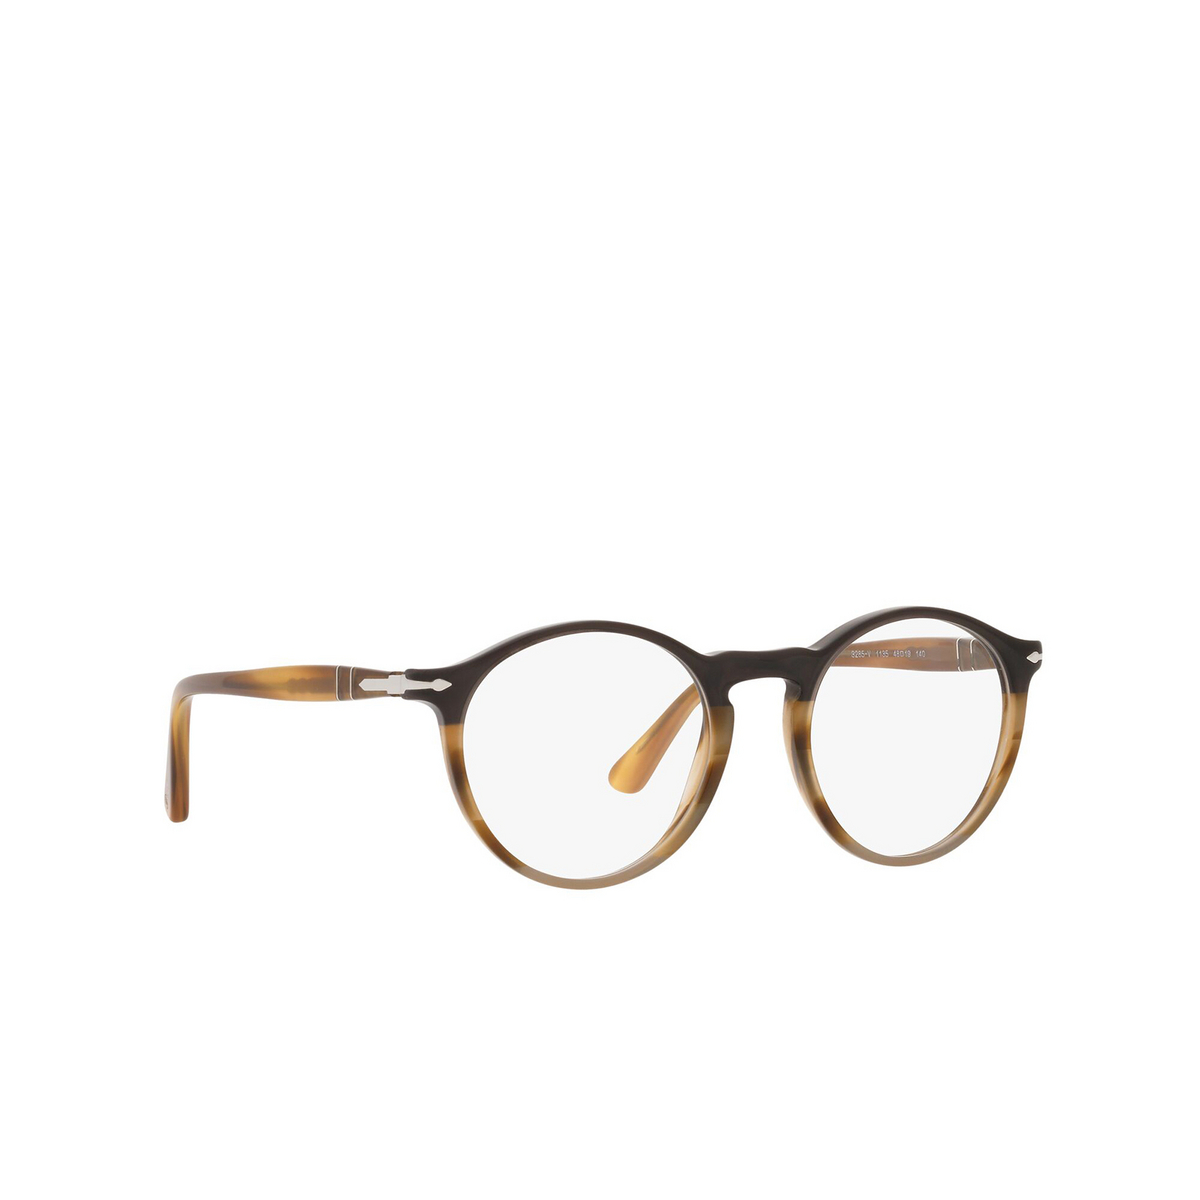 Persol® Round Eyeglasses: PO3285V color Black / Striped Brown / Grey 1135 - three-quarters view.